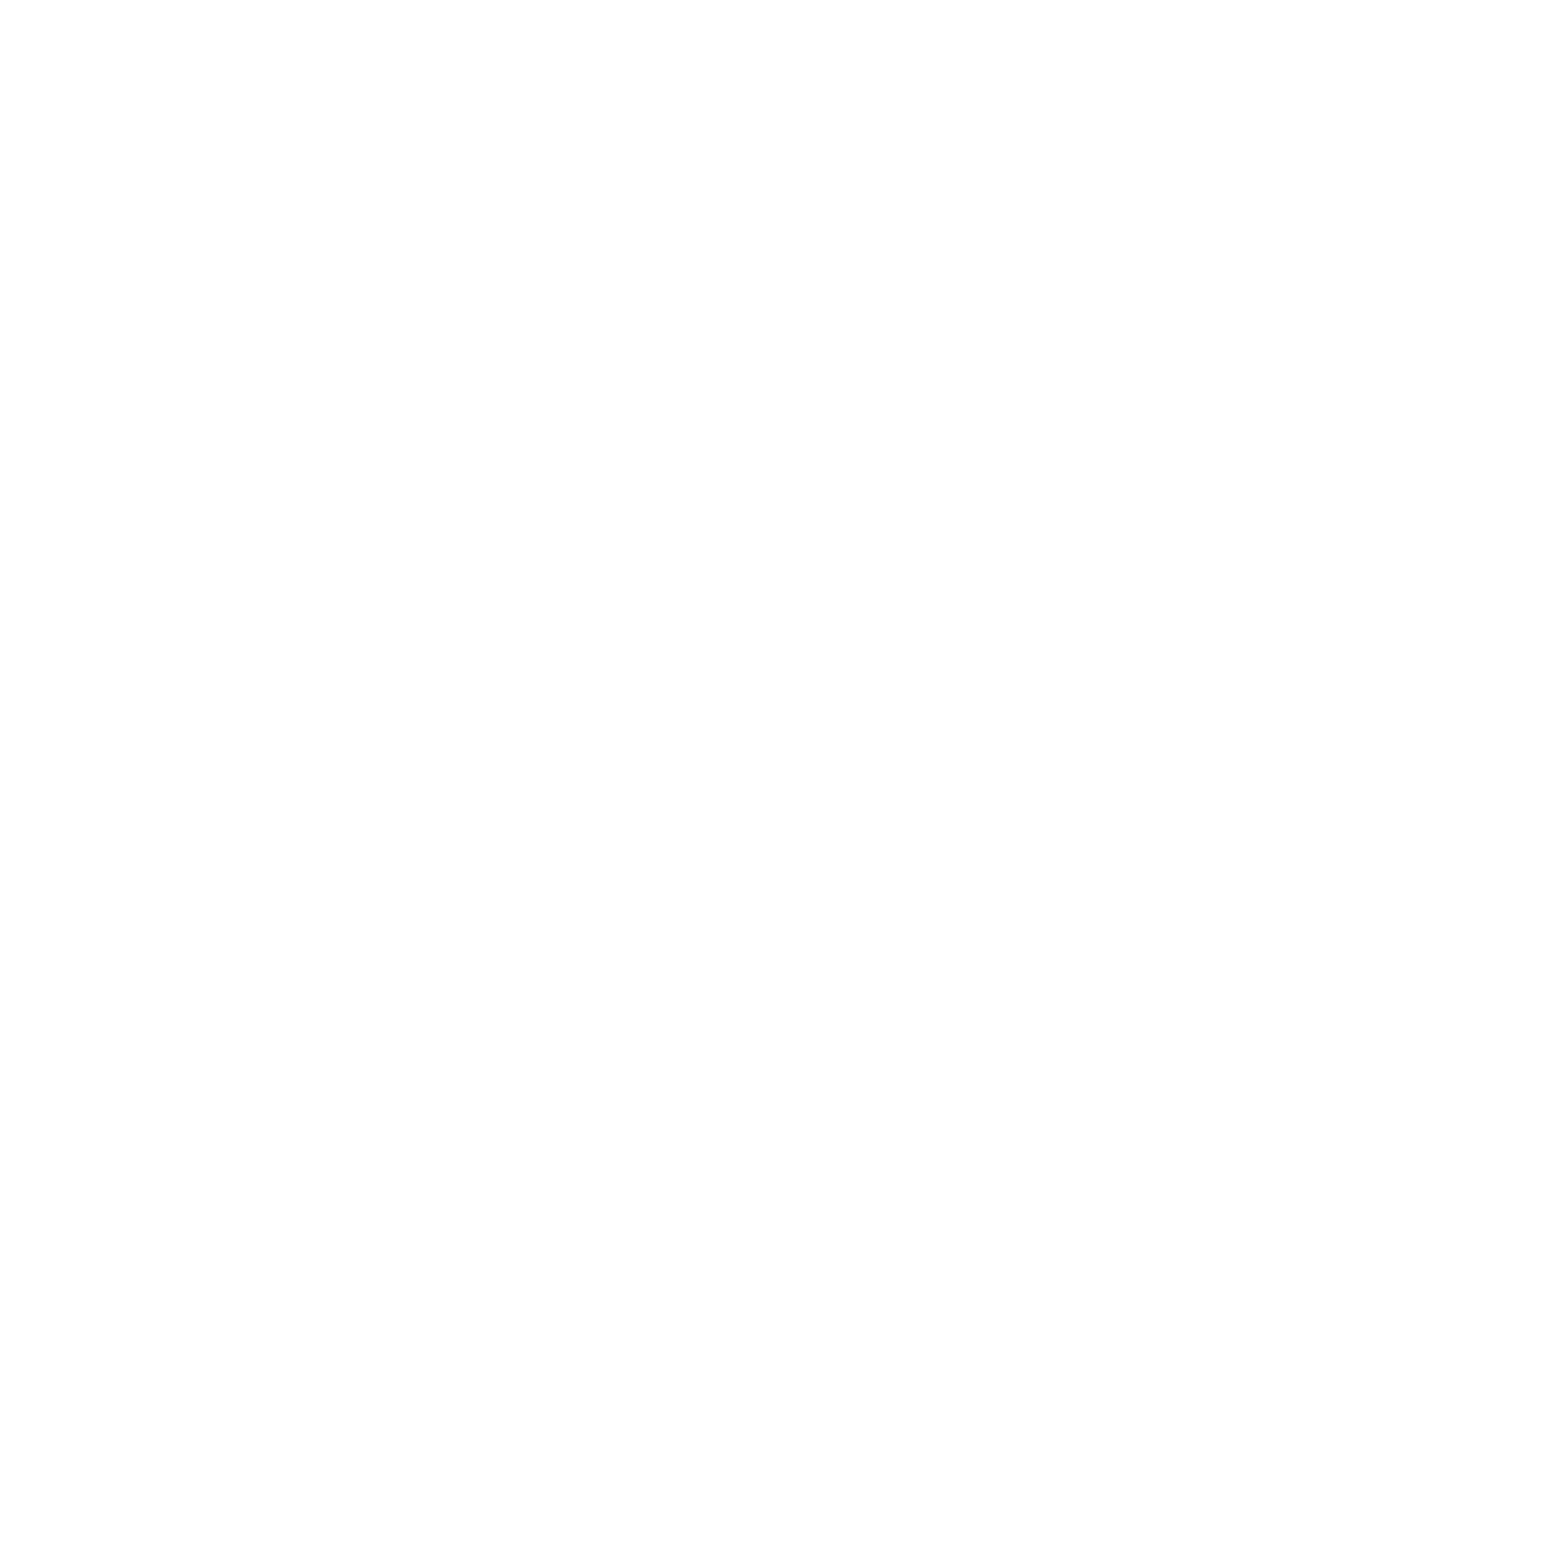 Travel South America